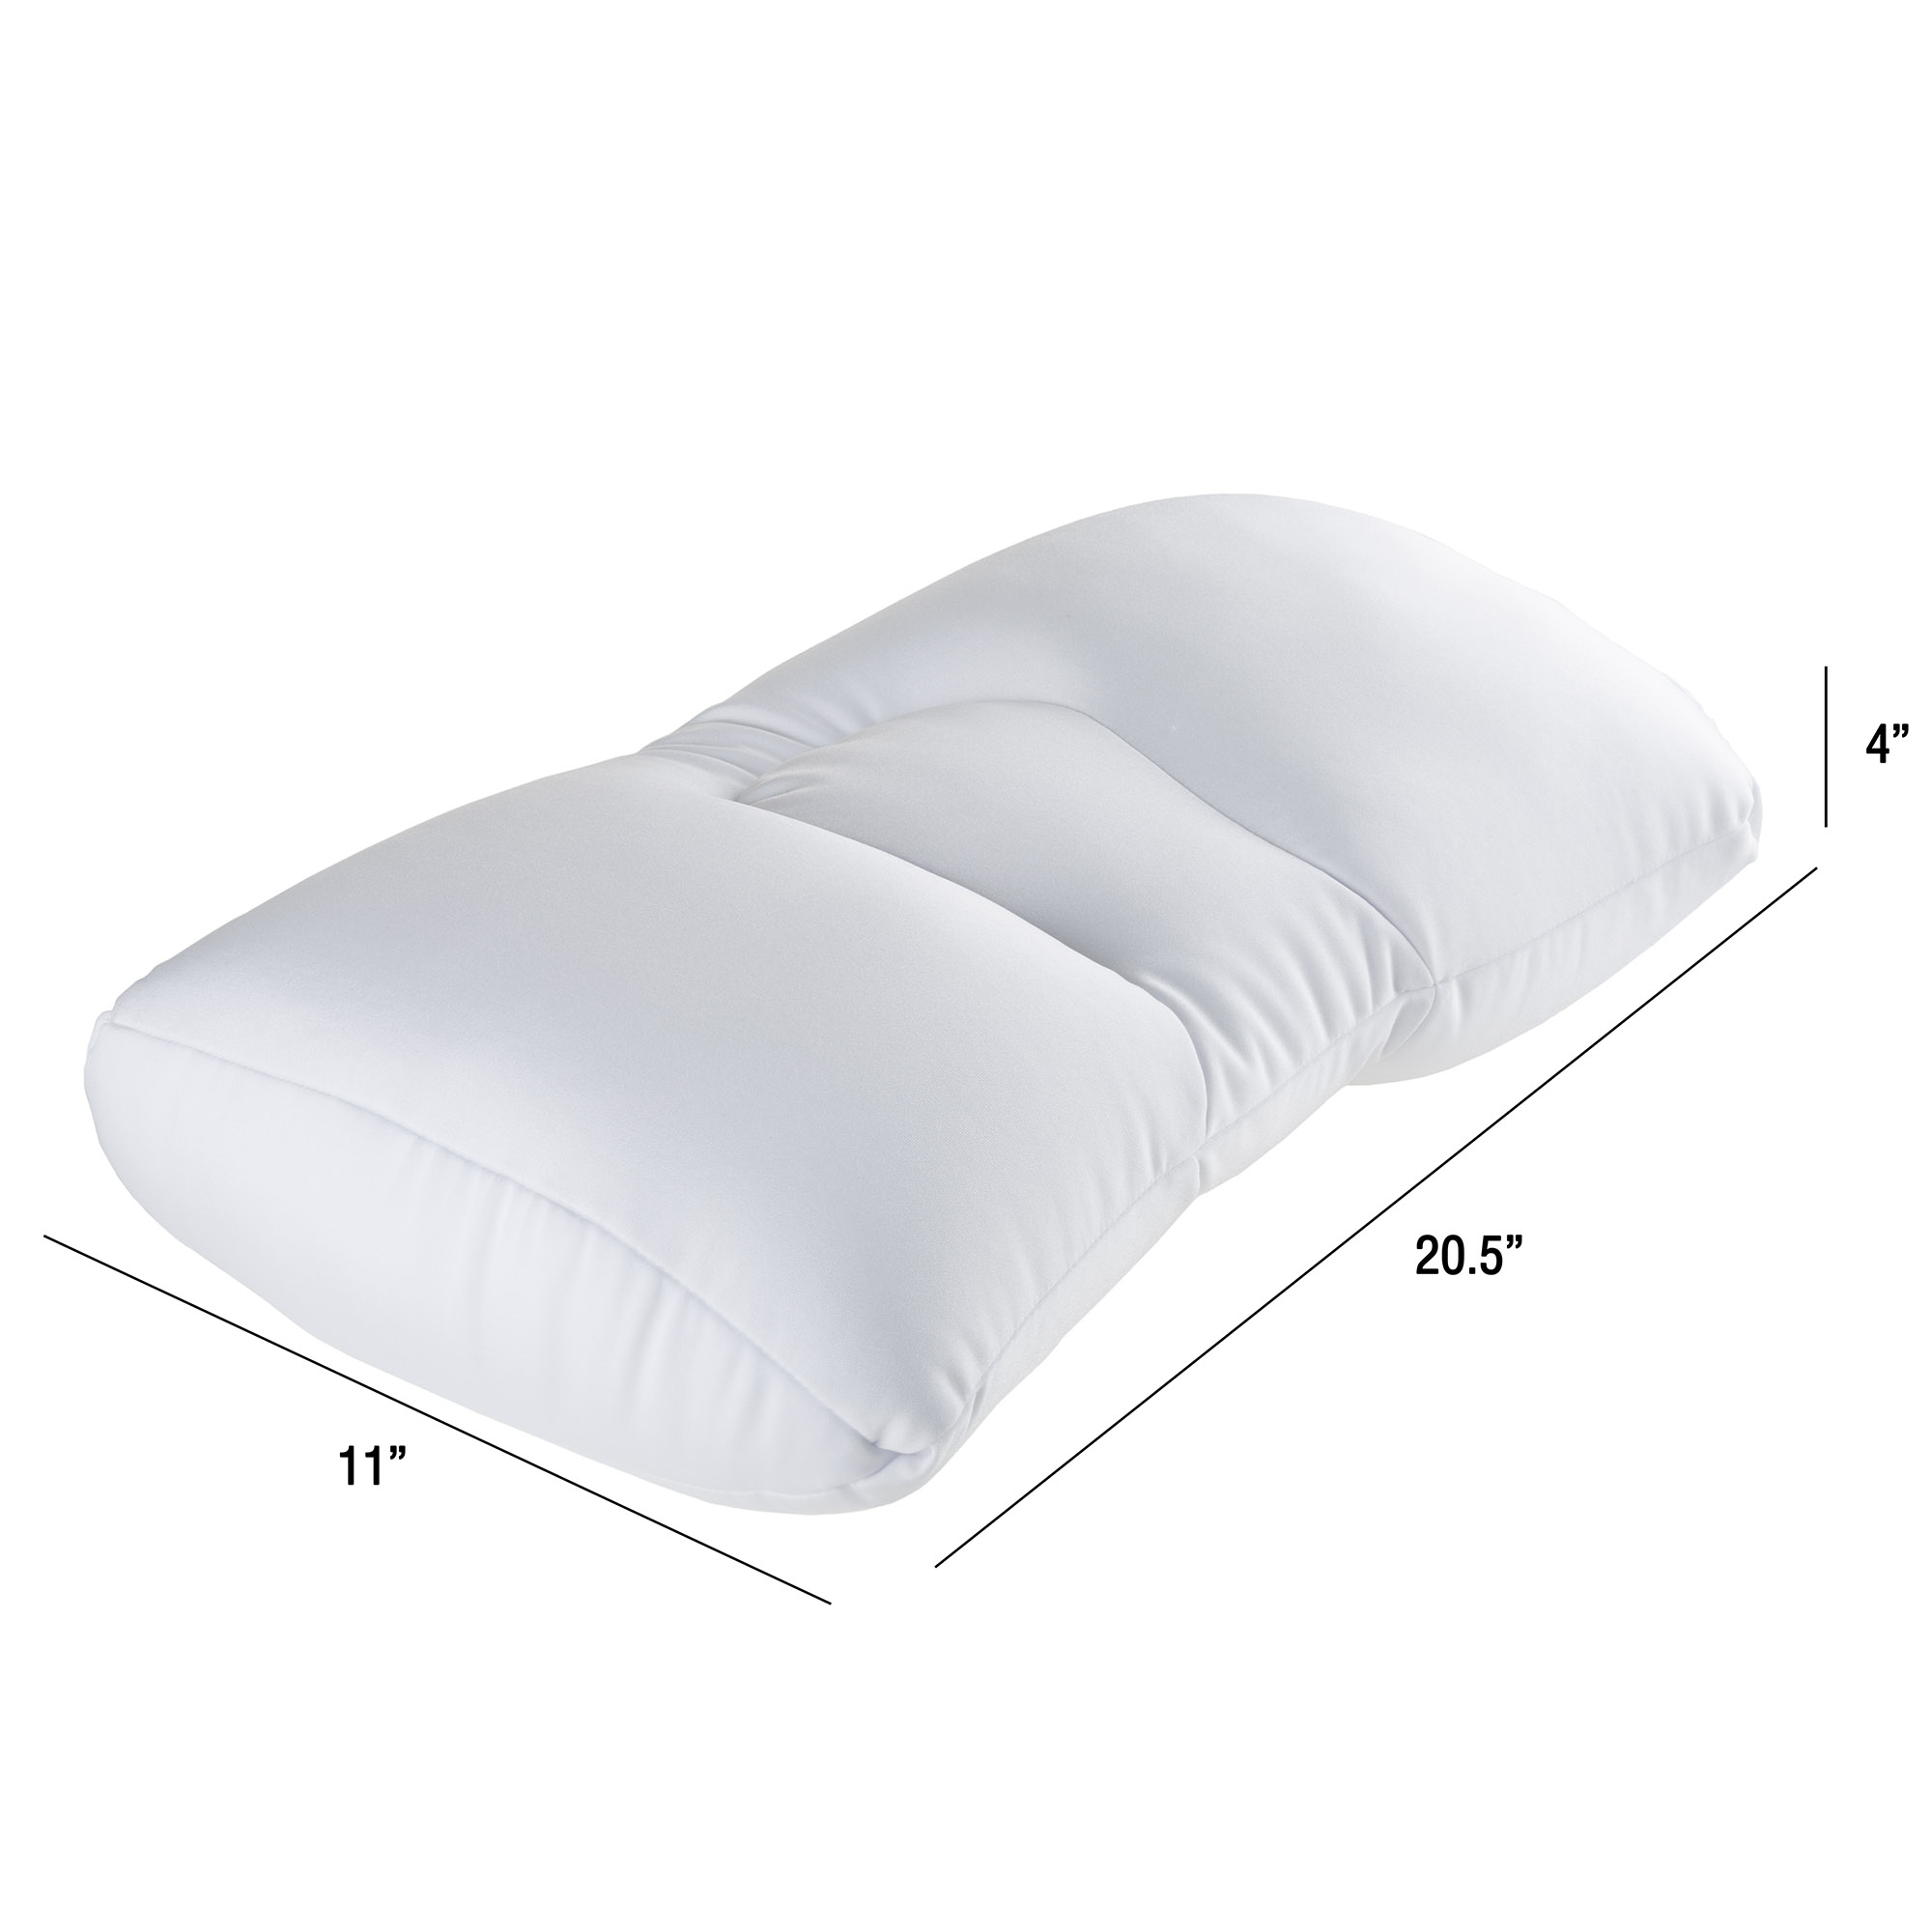 Homedics microbead pillow